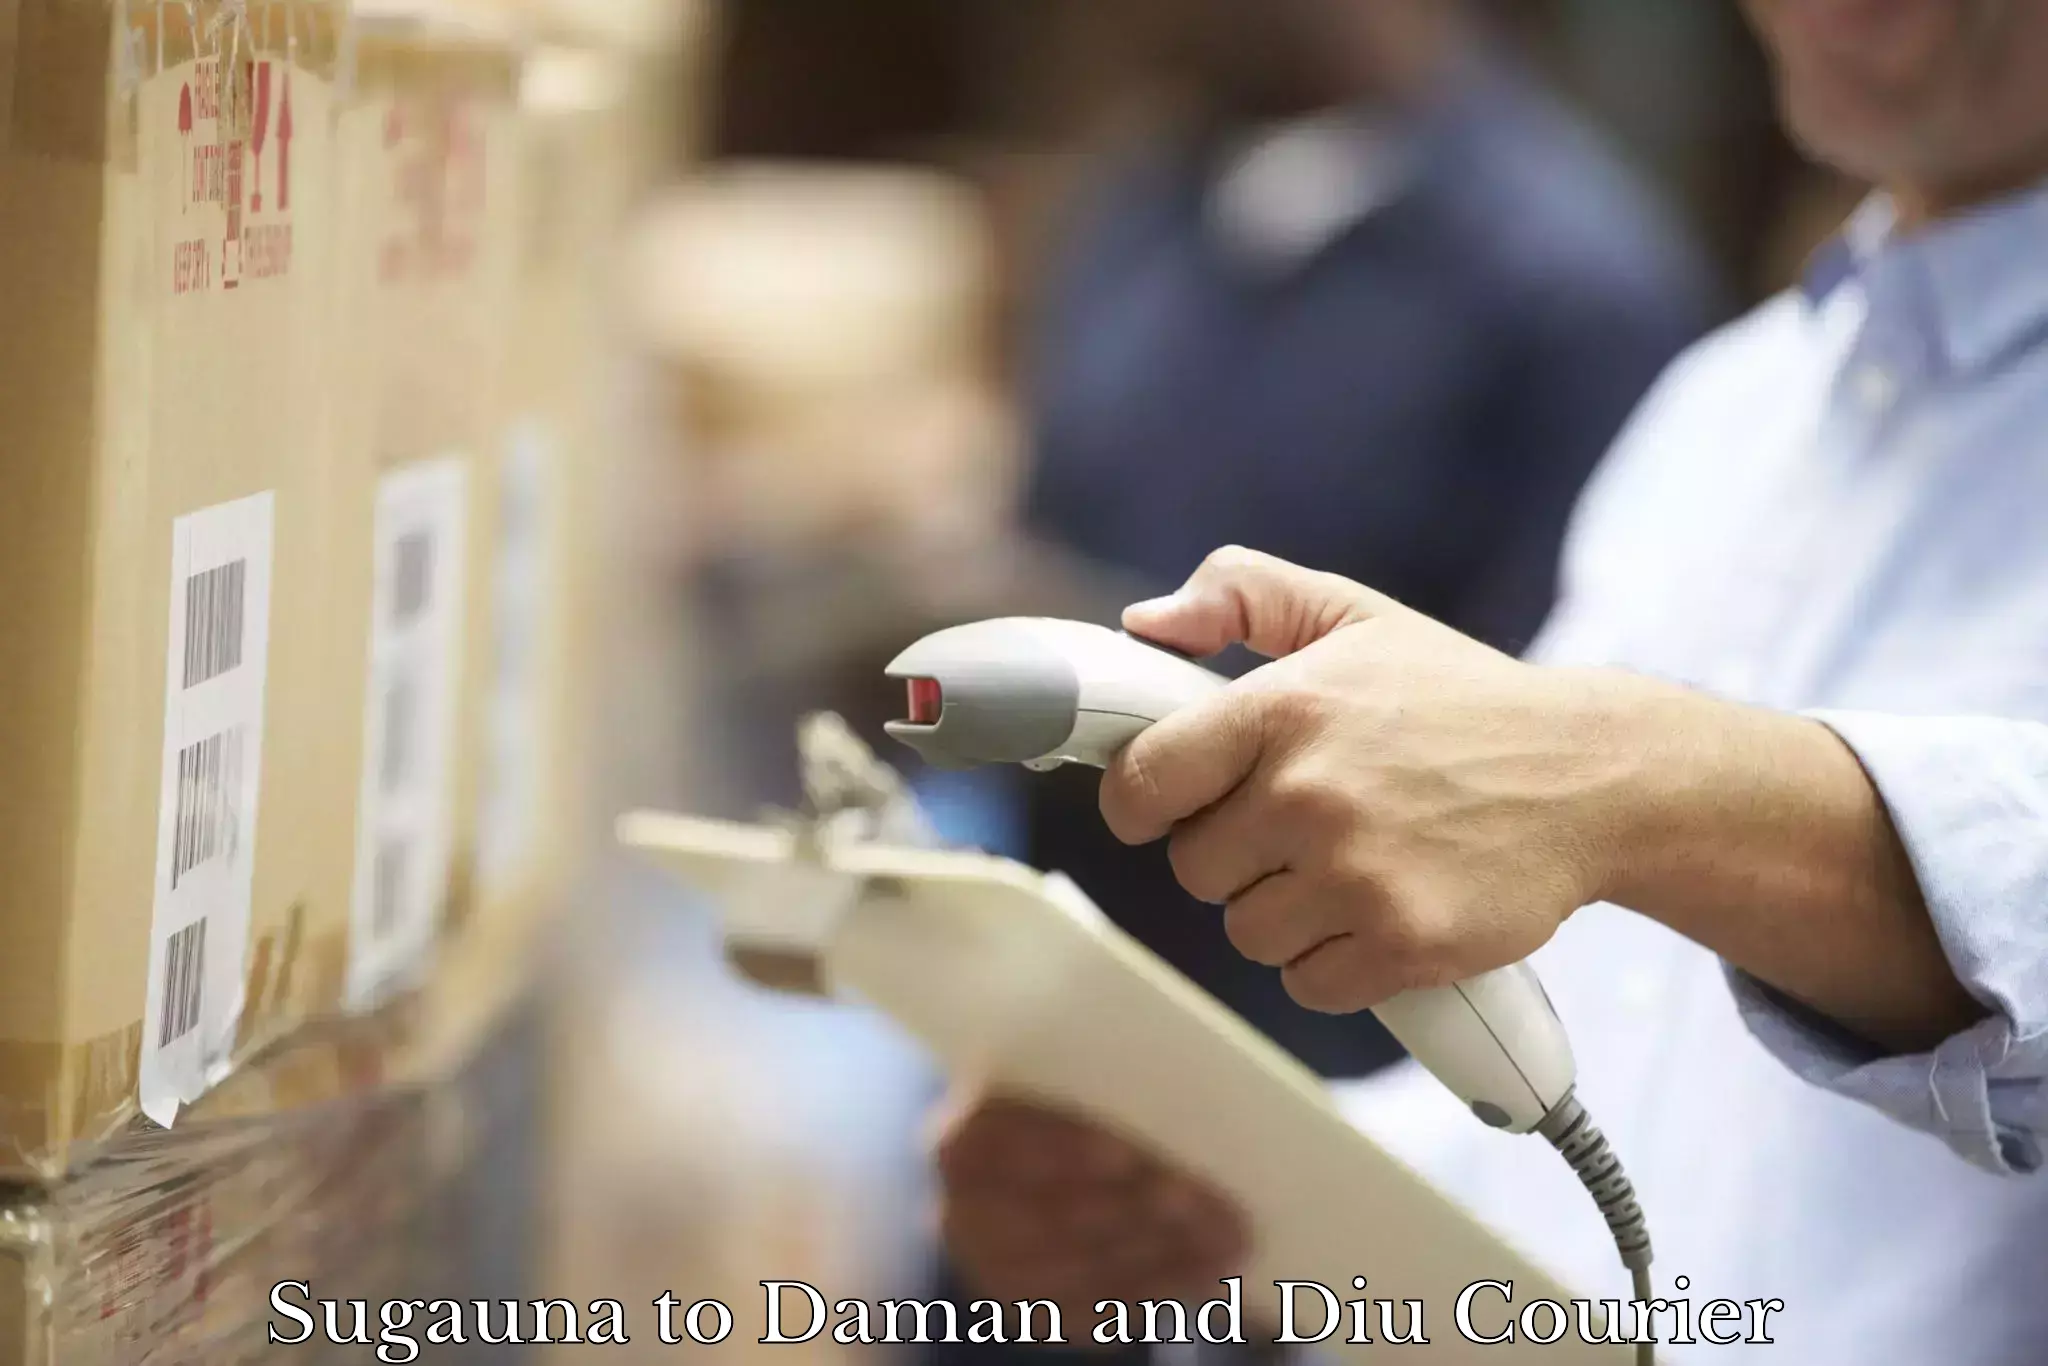 Secure packaging in Sugauna to Daman and Diu